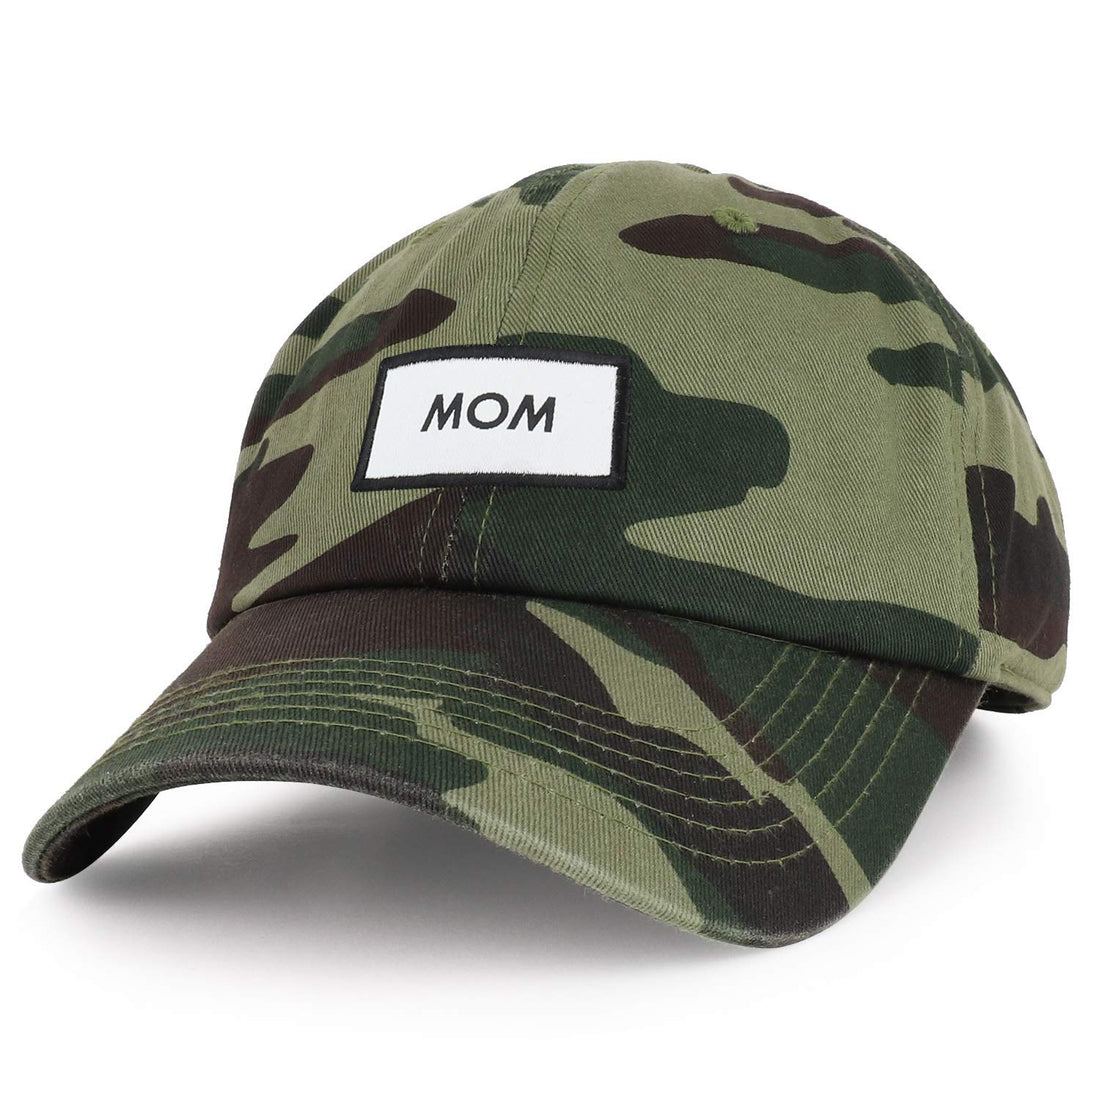 Trendy Apparel Shop Mom Woven Patch Cotton Dad Hat- CAMO